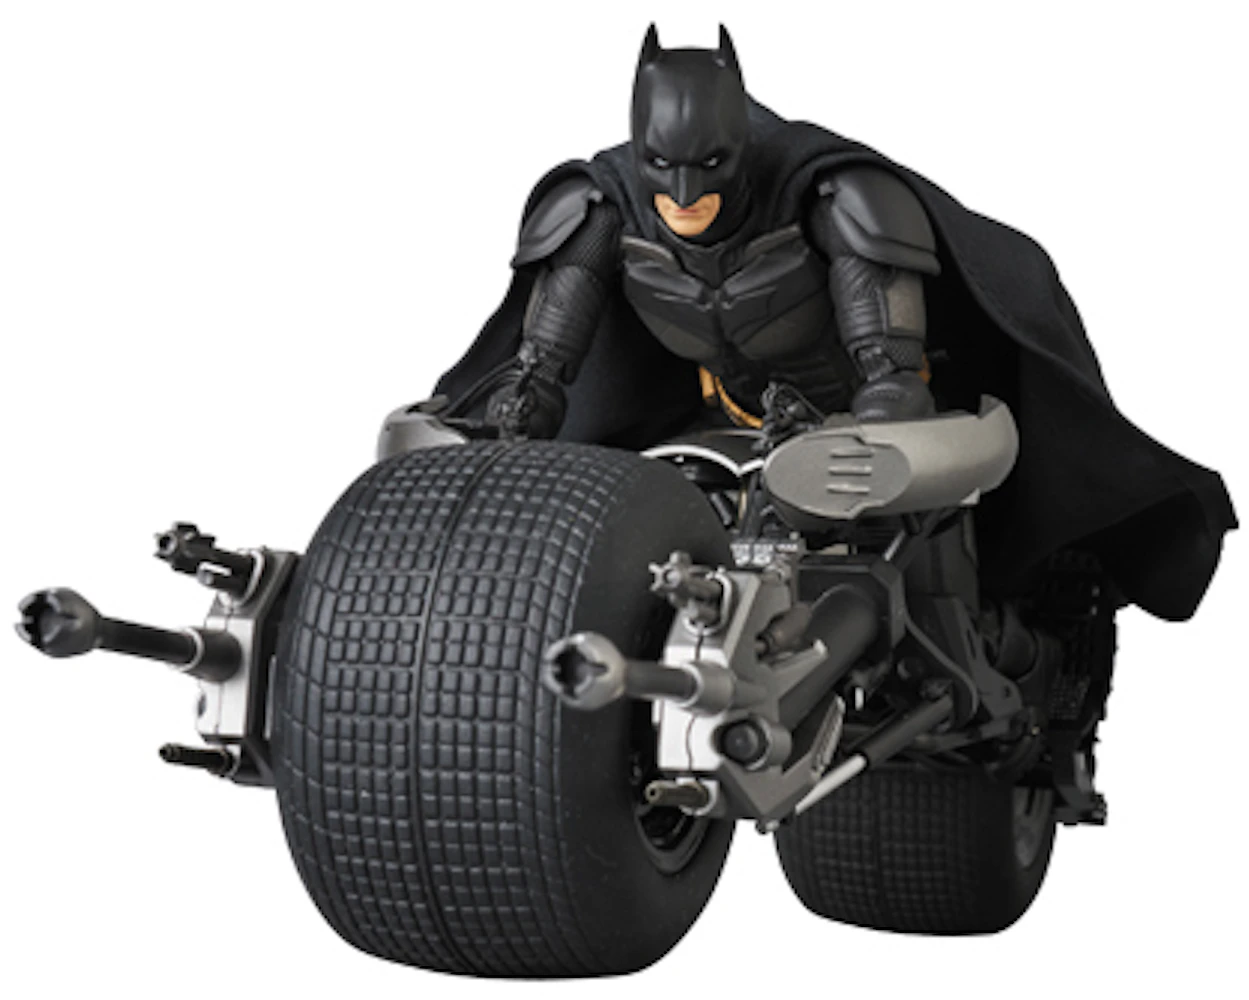 Medicom Mafex Batman The Dark Knight Trilogy Batpod No. 008 Action Figure -  US